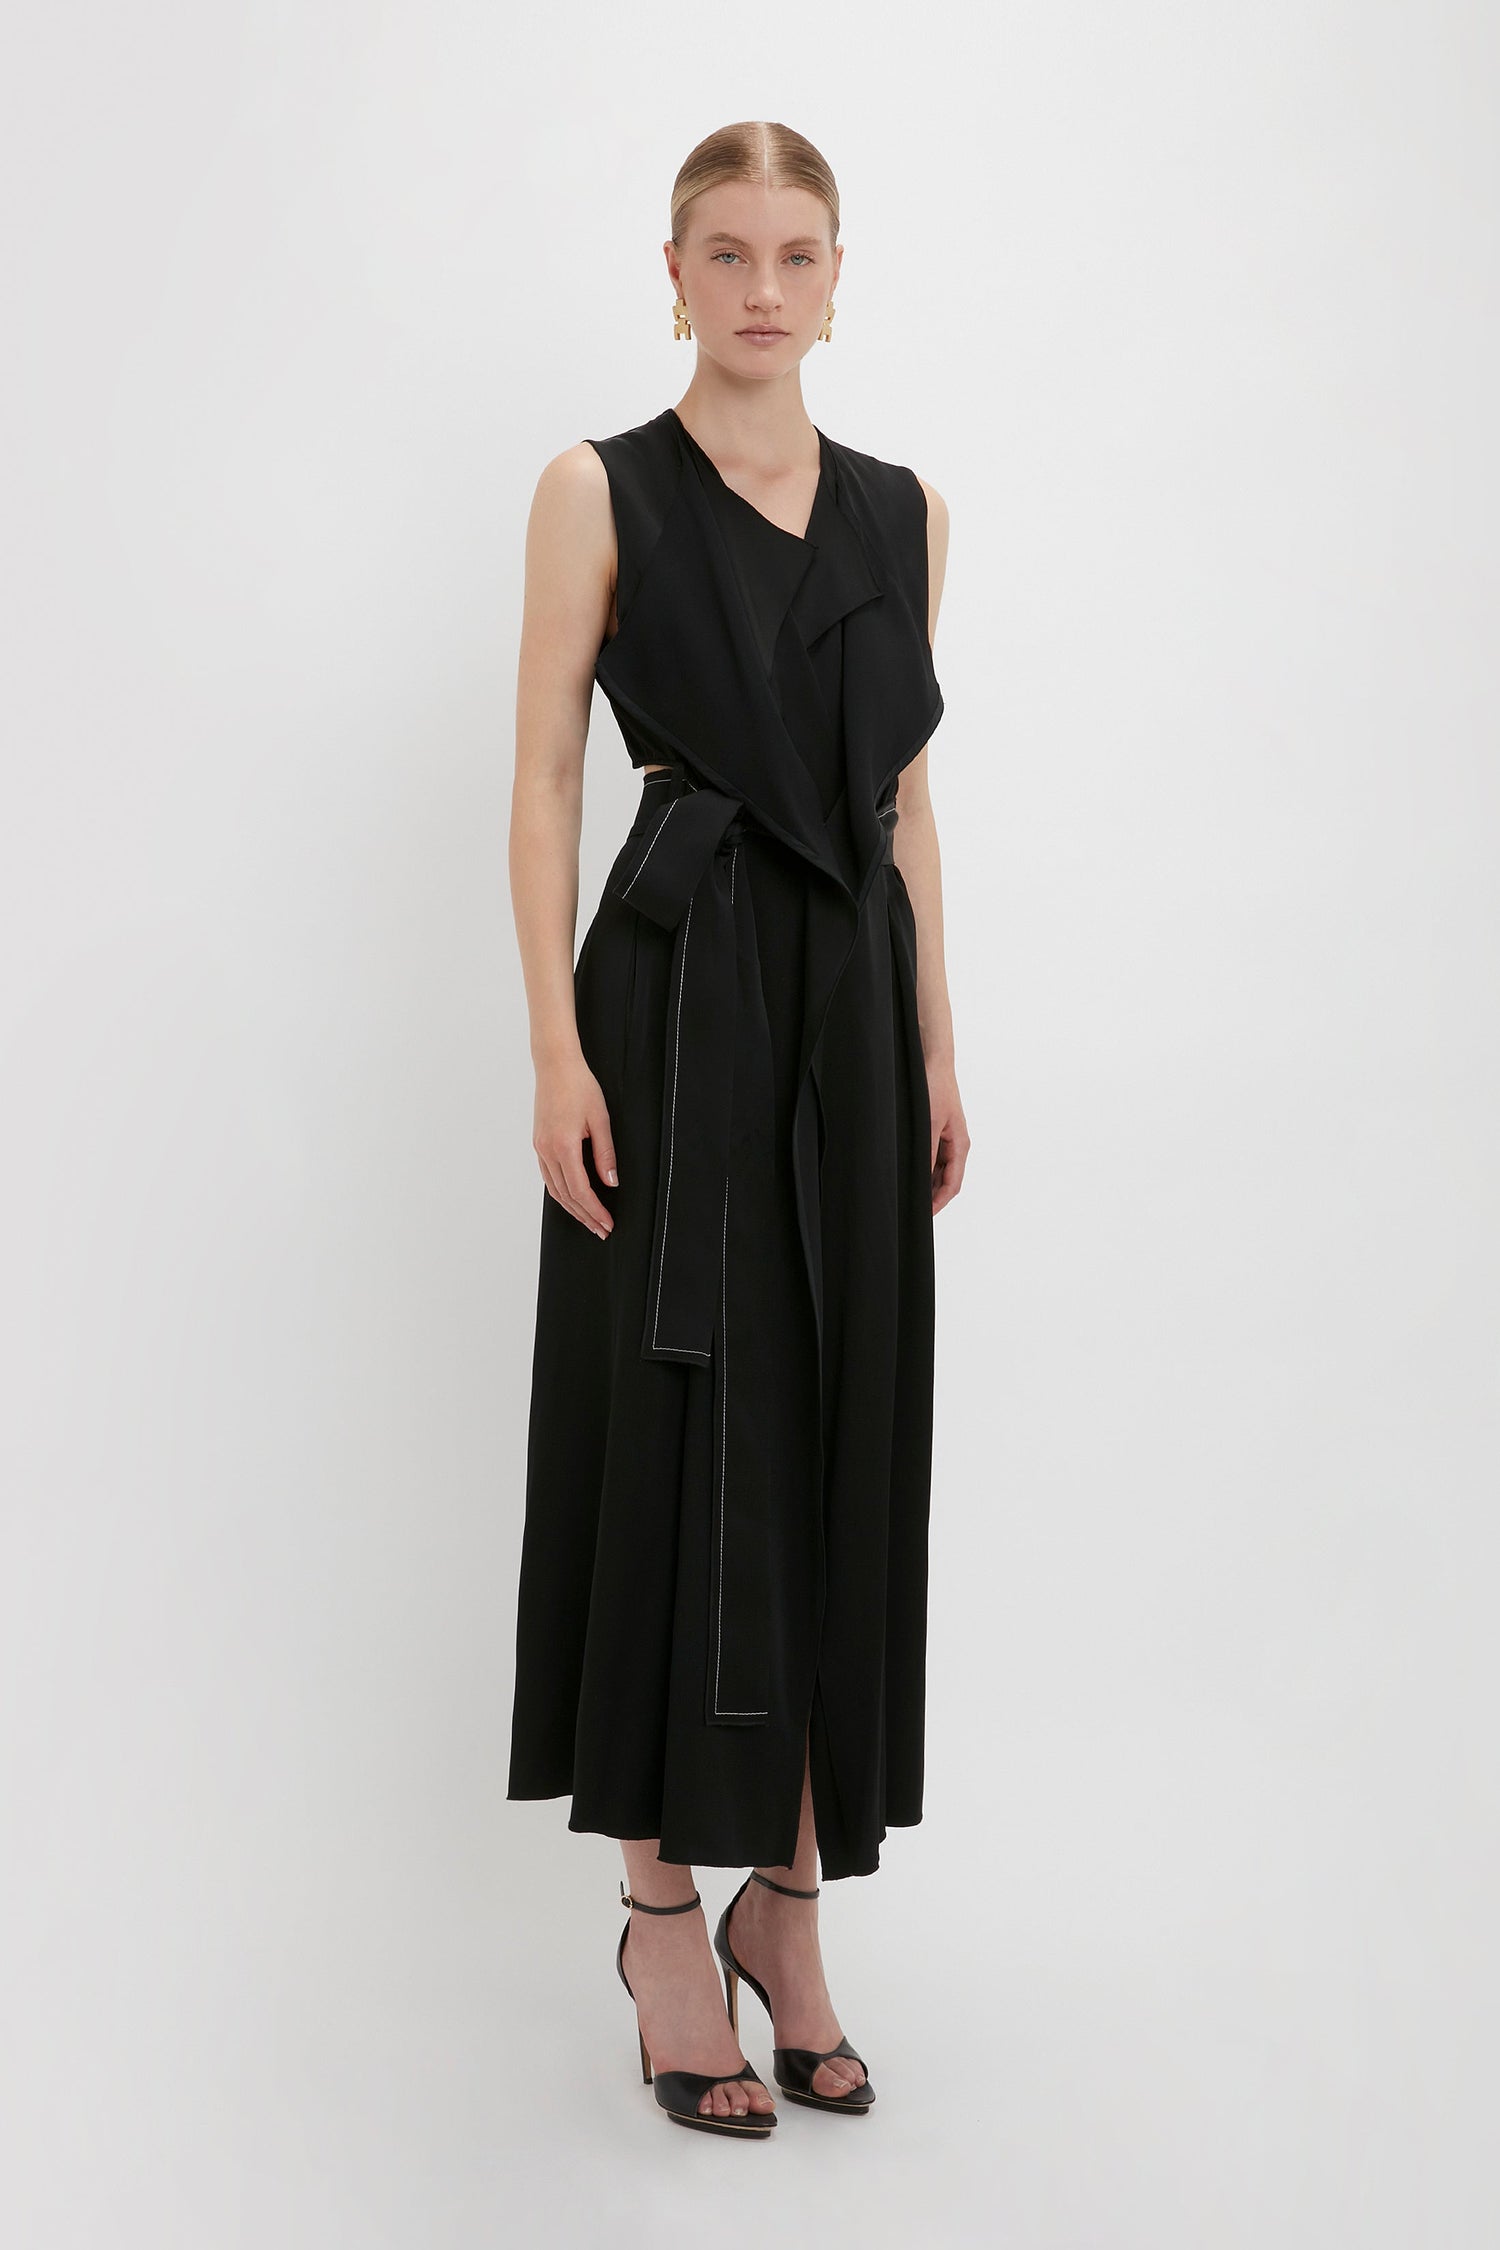 Victoria Beckham | Trench Dress - Black